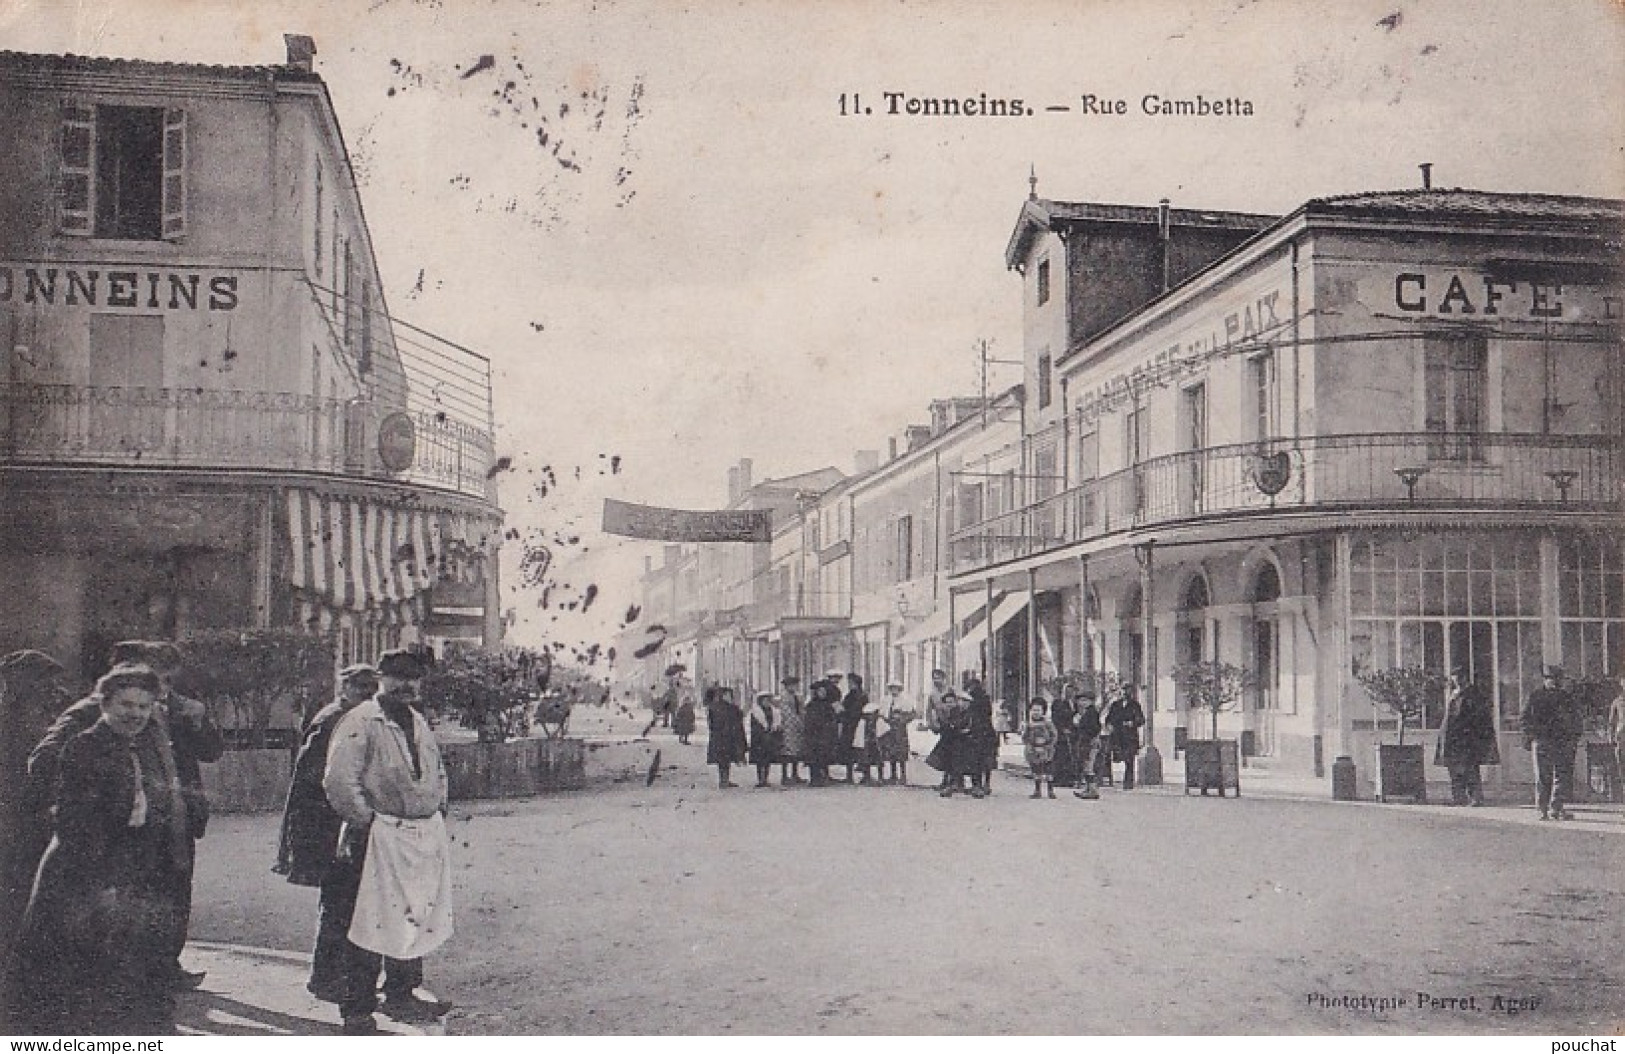 I24-47) TONNEINS - RUE GAMBETTA - GRAND CAFE DE LA PAIX - HABITANTS  - EN 1906 - ( 2 SCANS ) - Tonneins